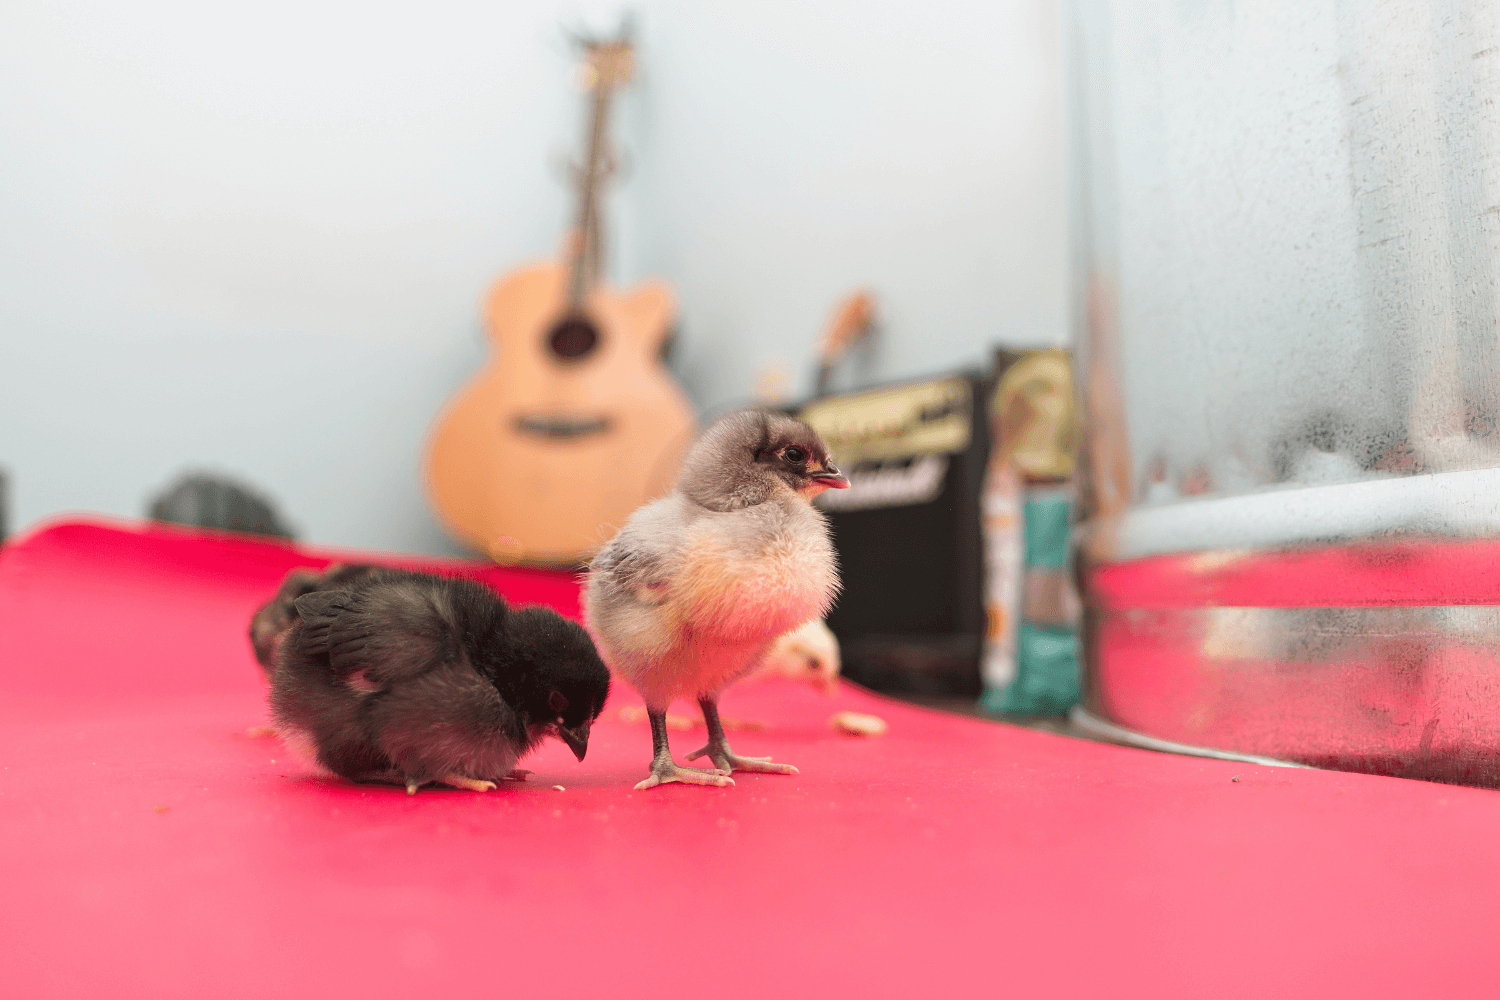 Small chicks roaming around at home